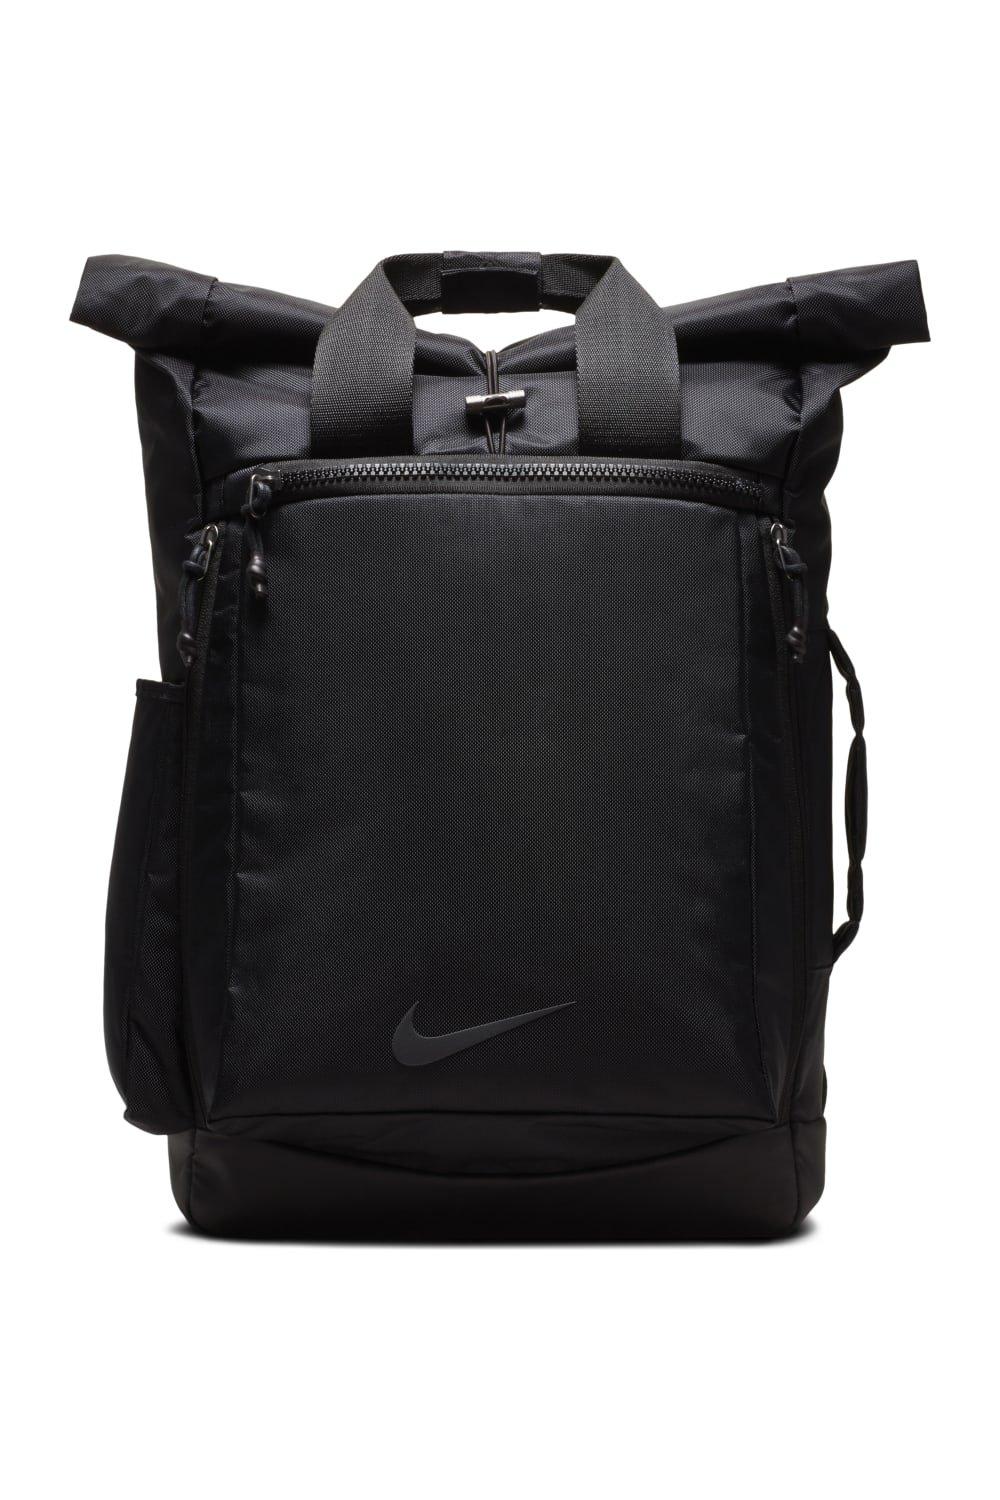 Nike Vapor Energy 2.0 Training Backpack Debenhams